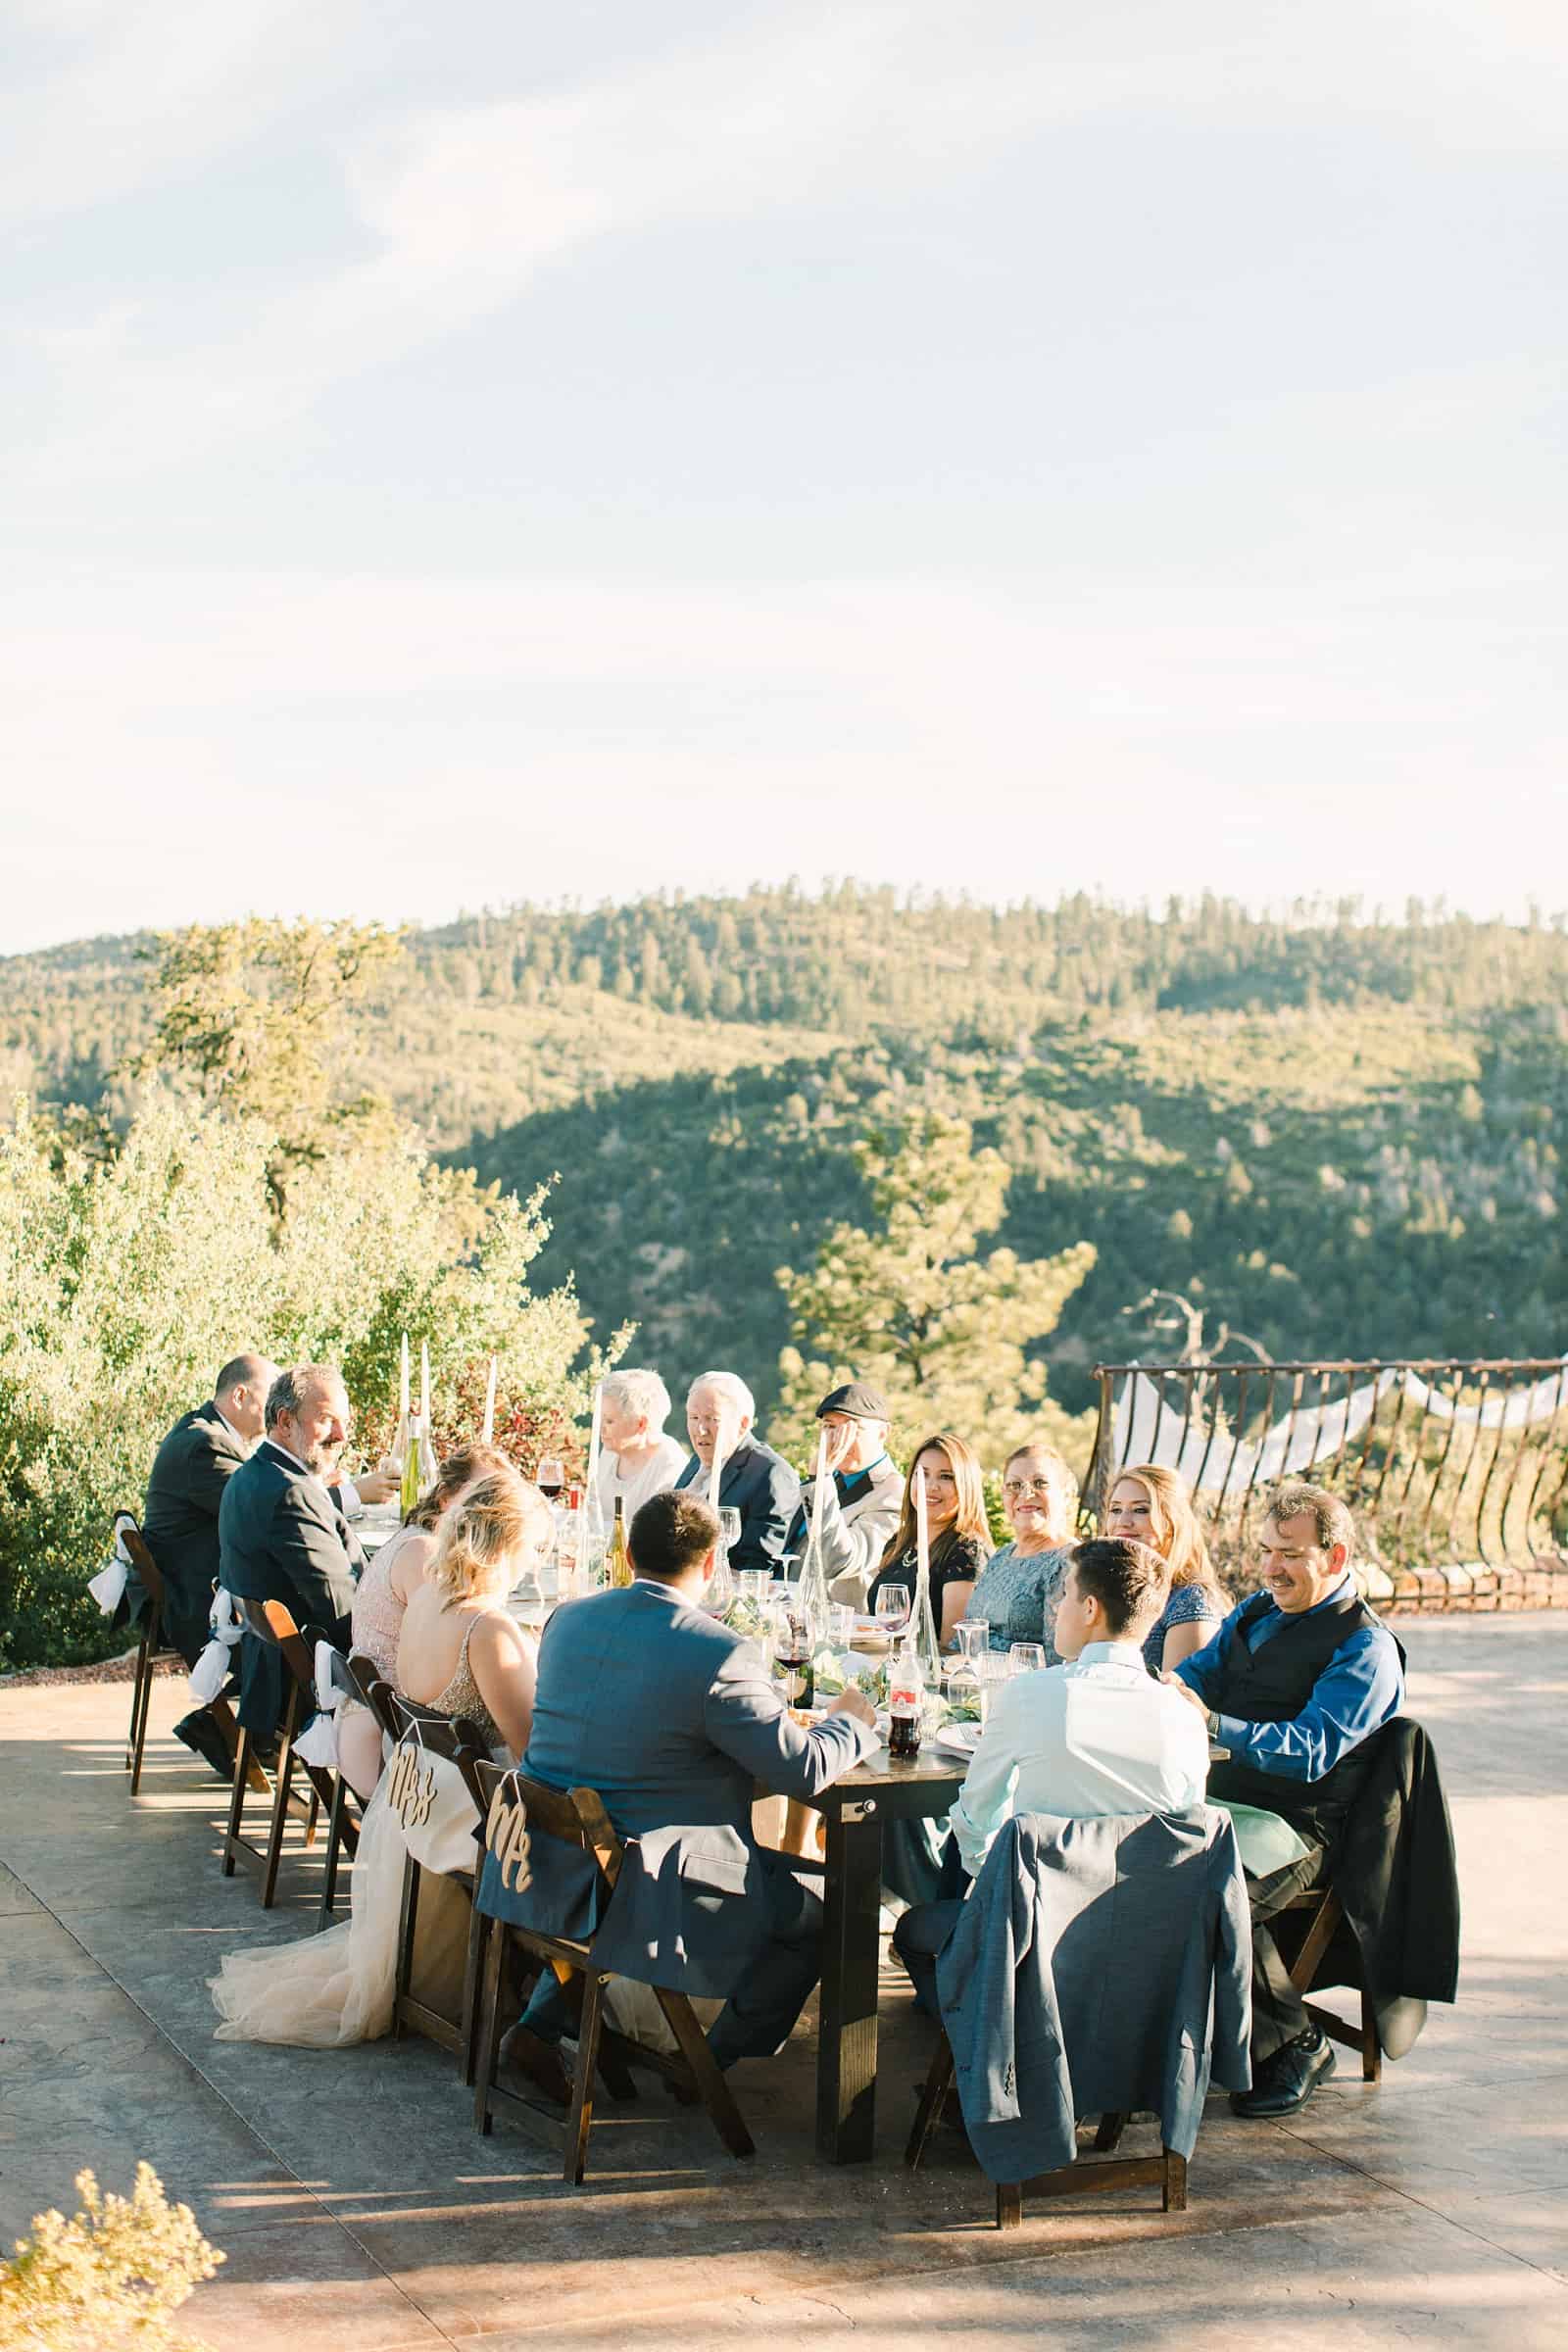 Outdoor wedding dinner reception near Zion National Park